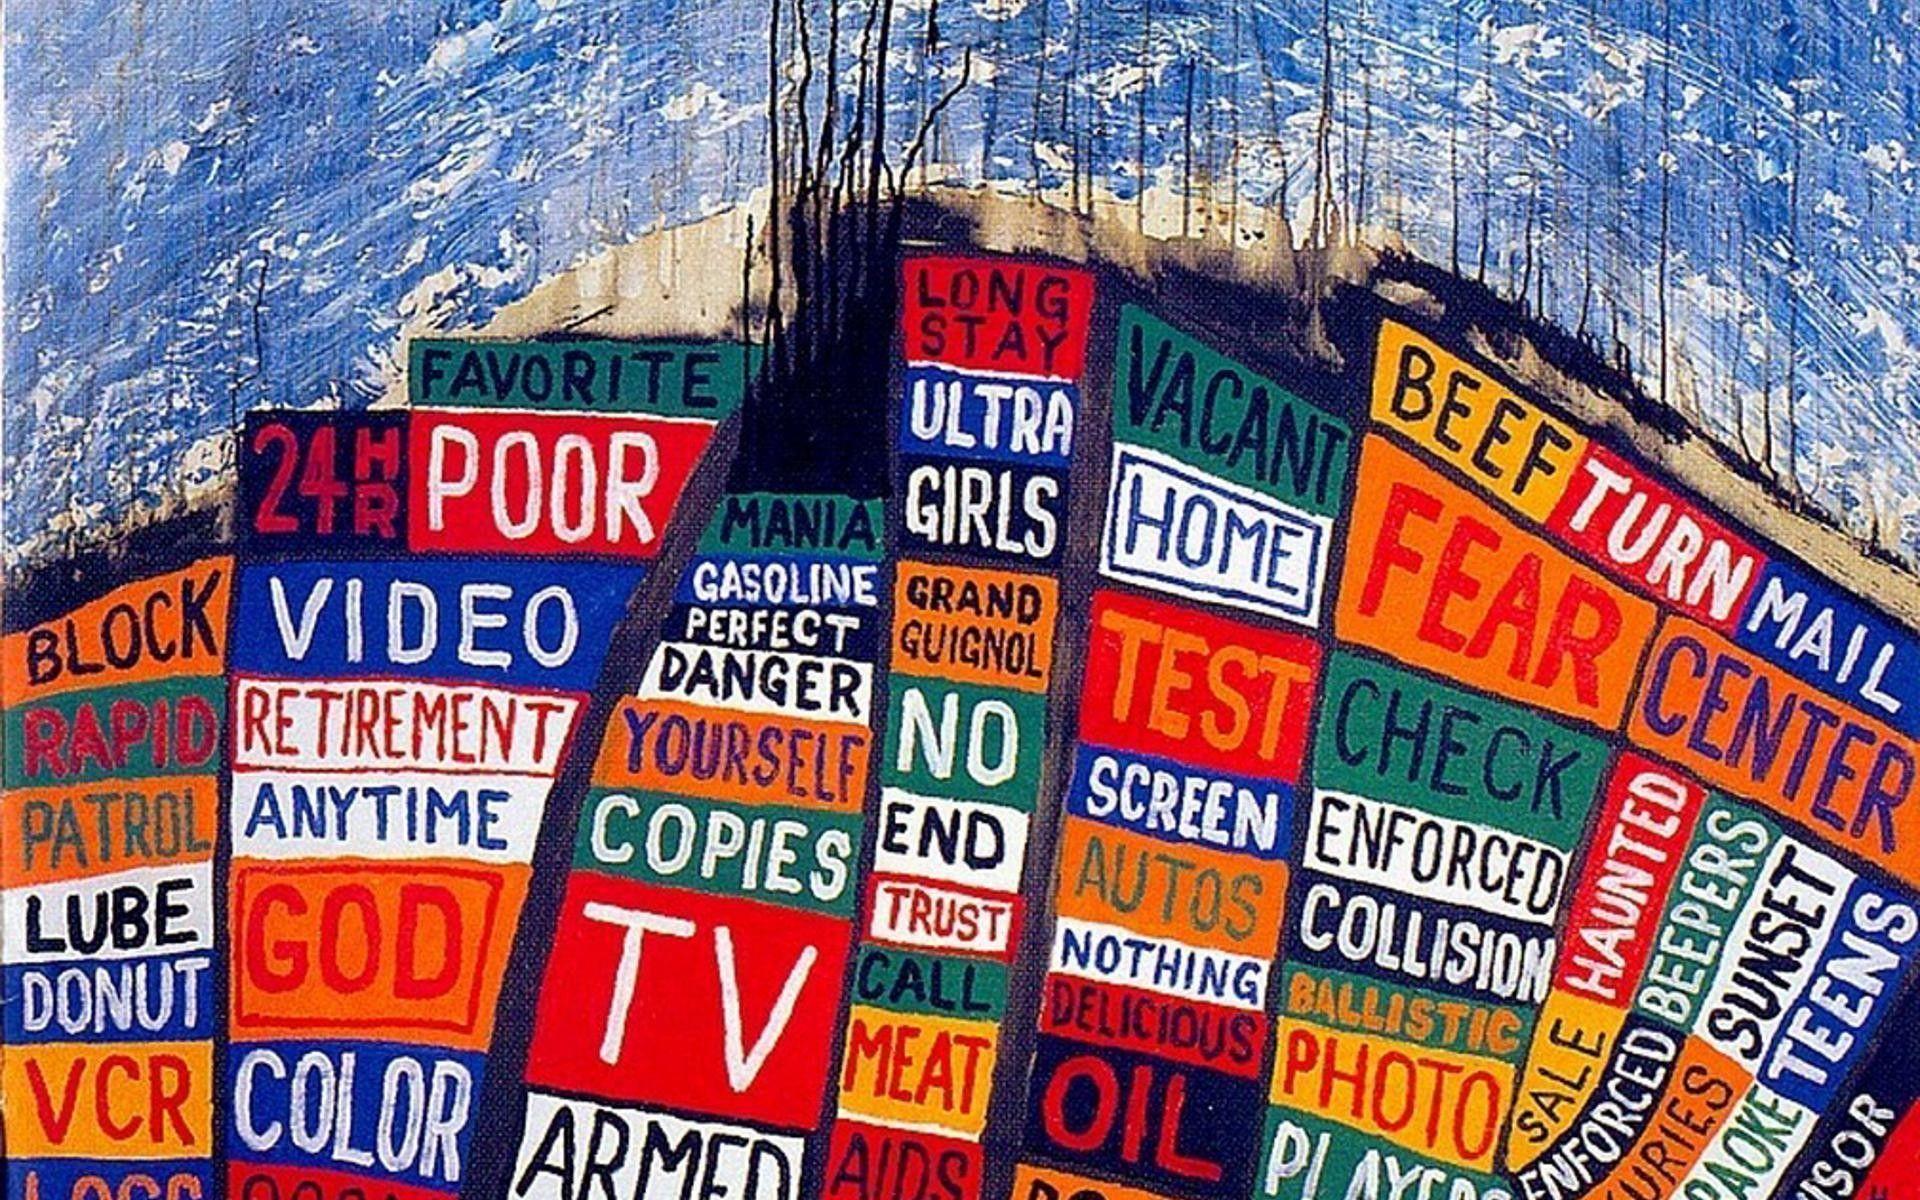 Radiohead Wallpapers Top Free Radiohead Backgrounds Wallpaperaccess